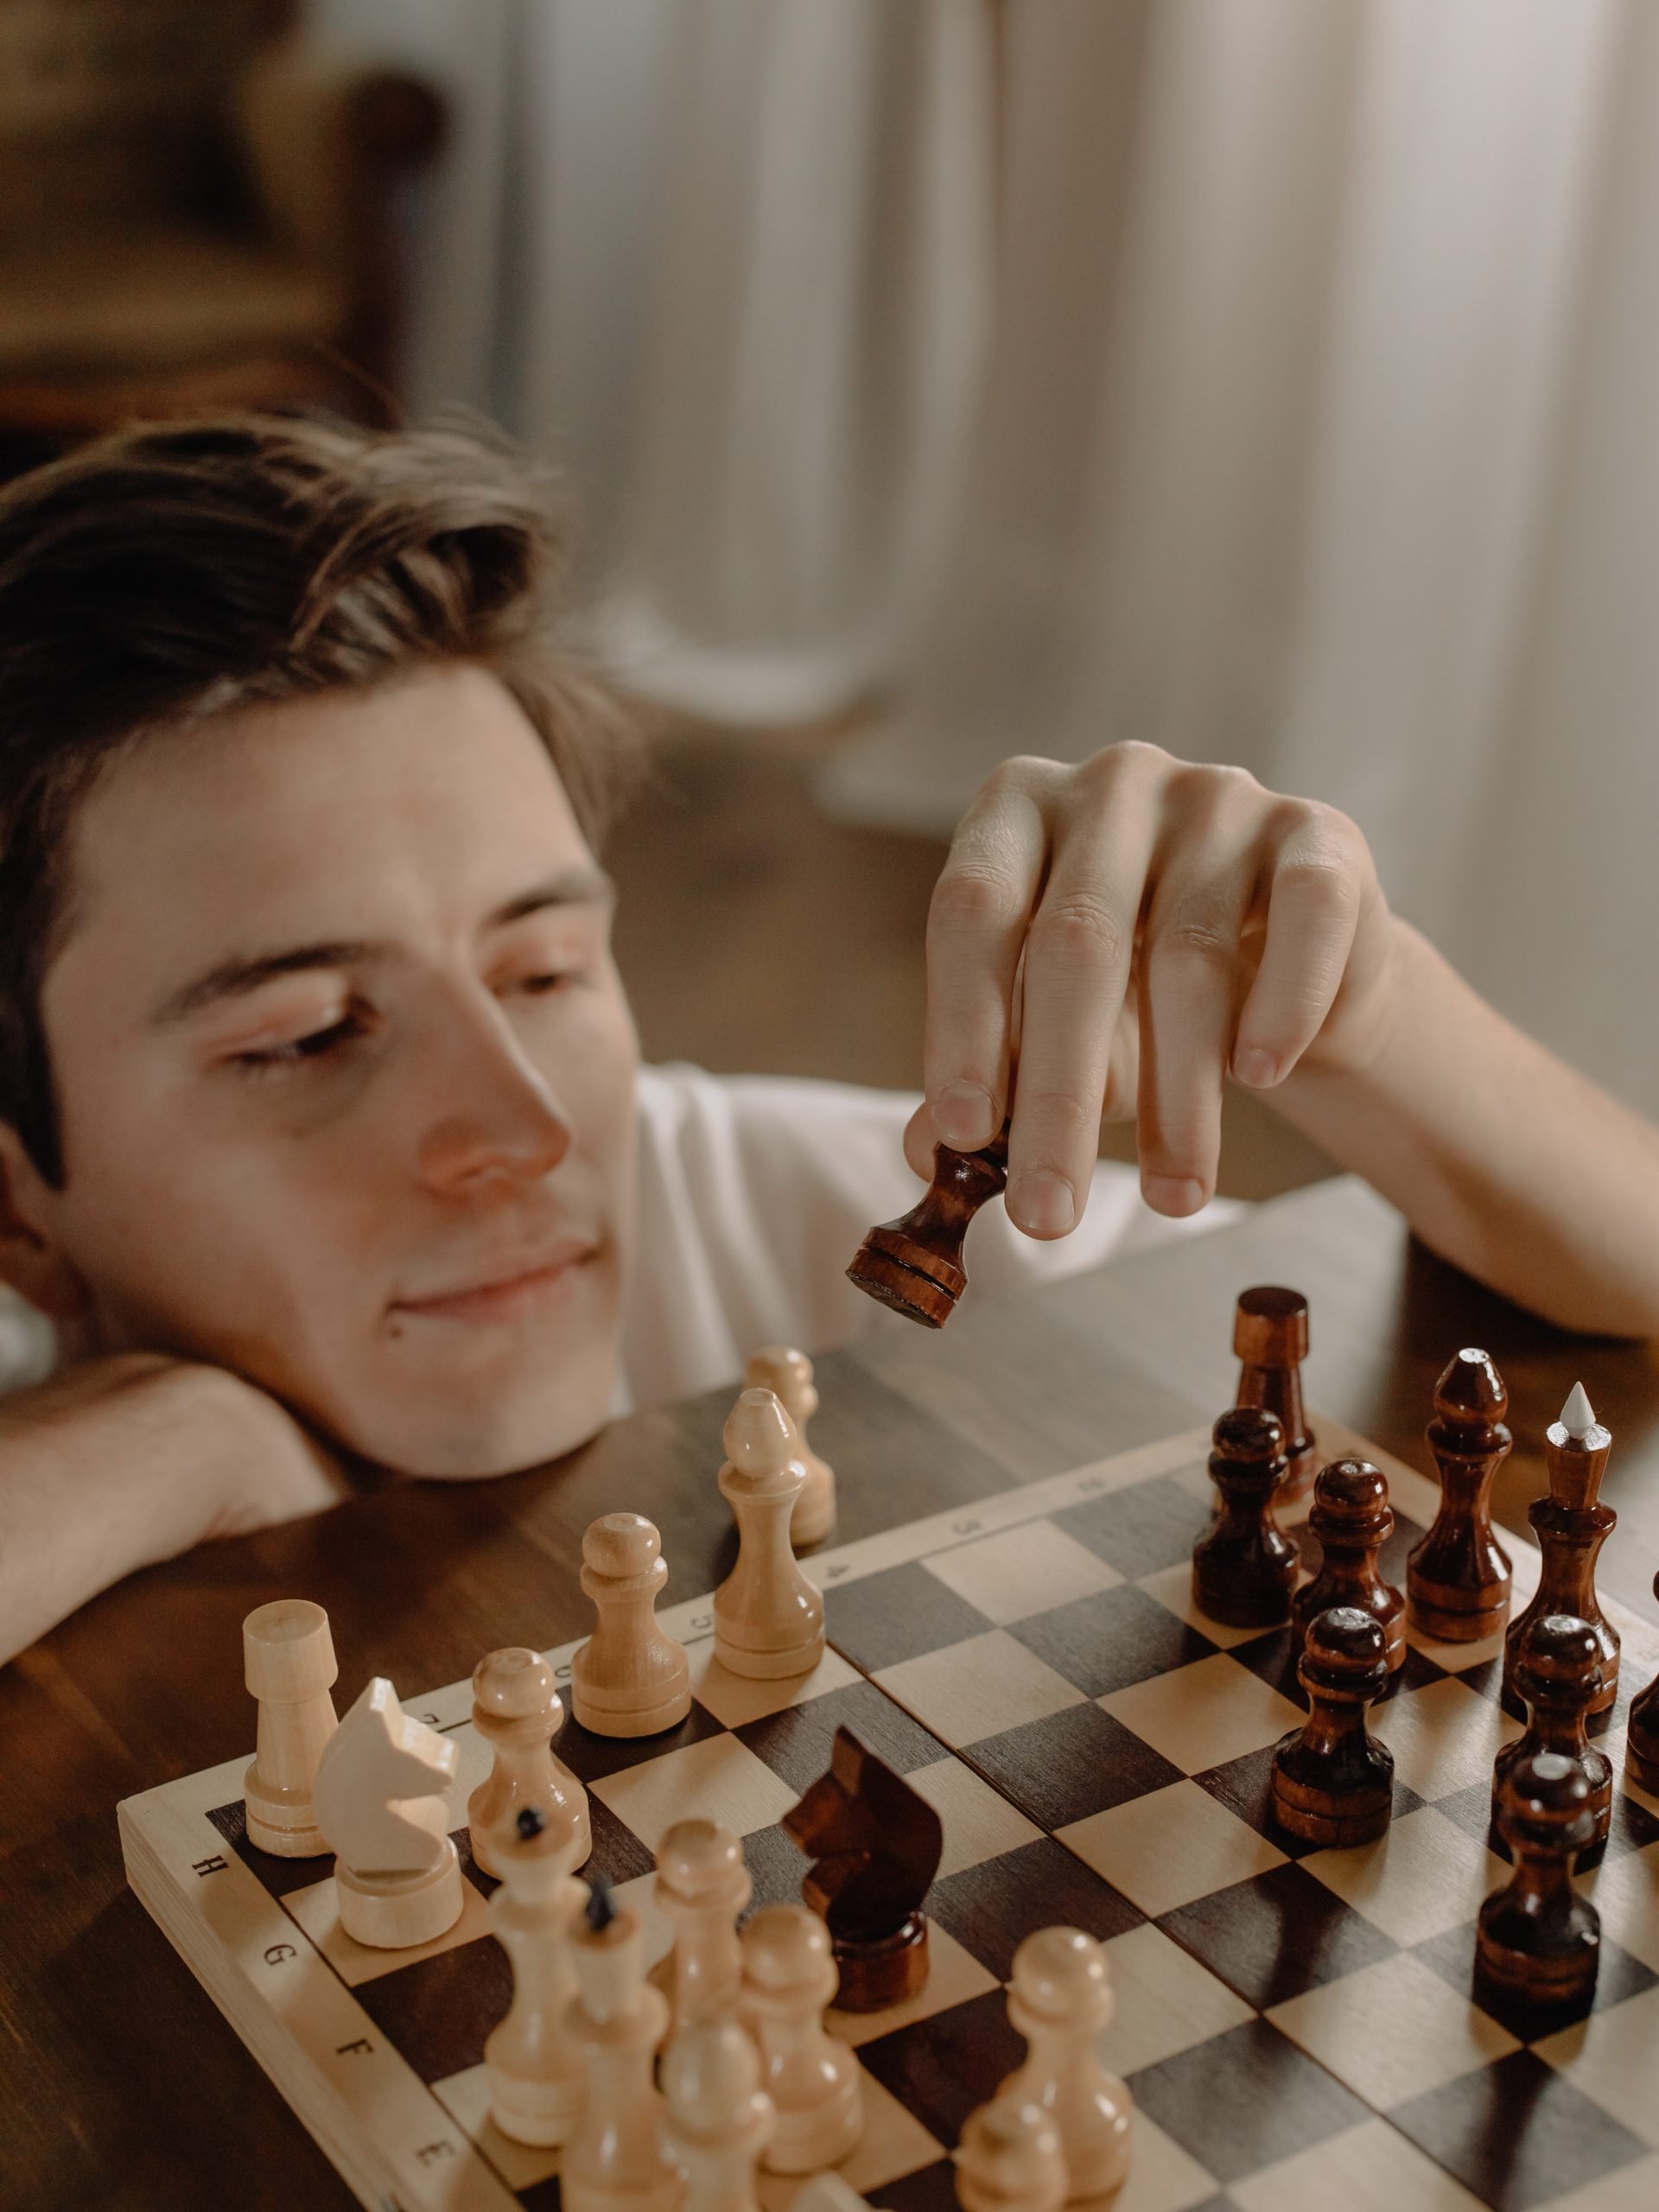 Better Chess Training: Chess Tactics: In-Between Move (Zwischenzug)